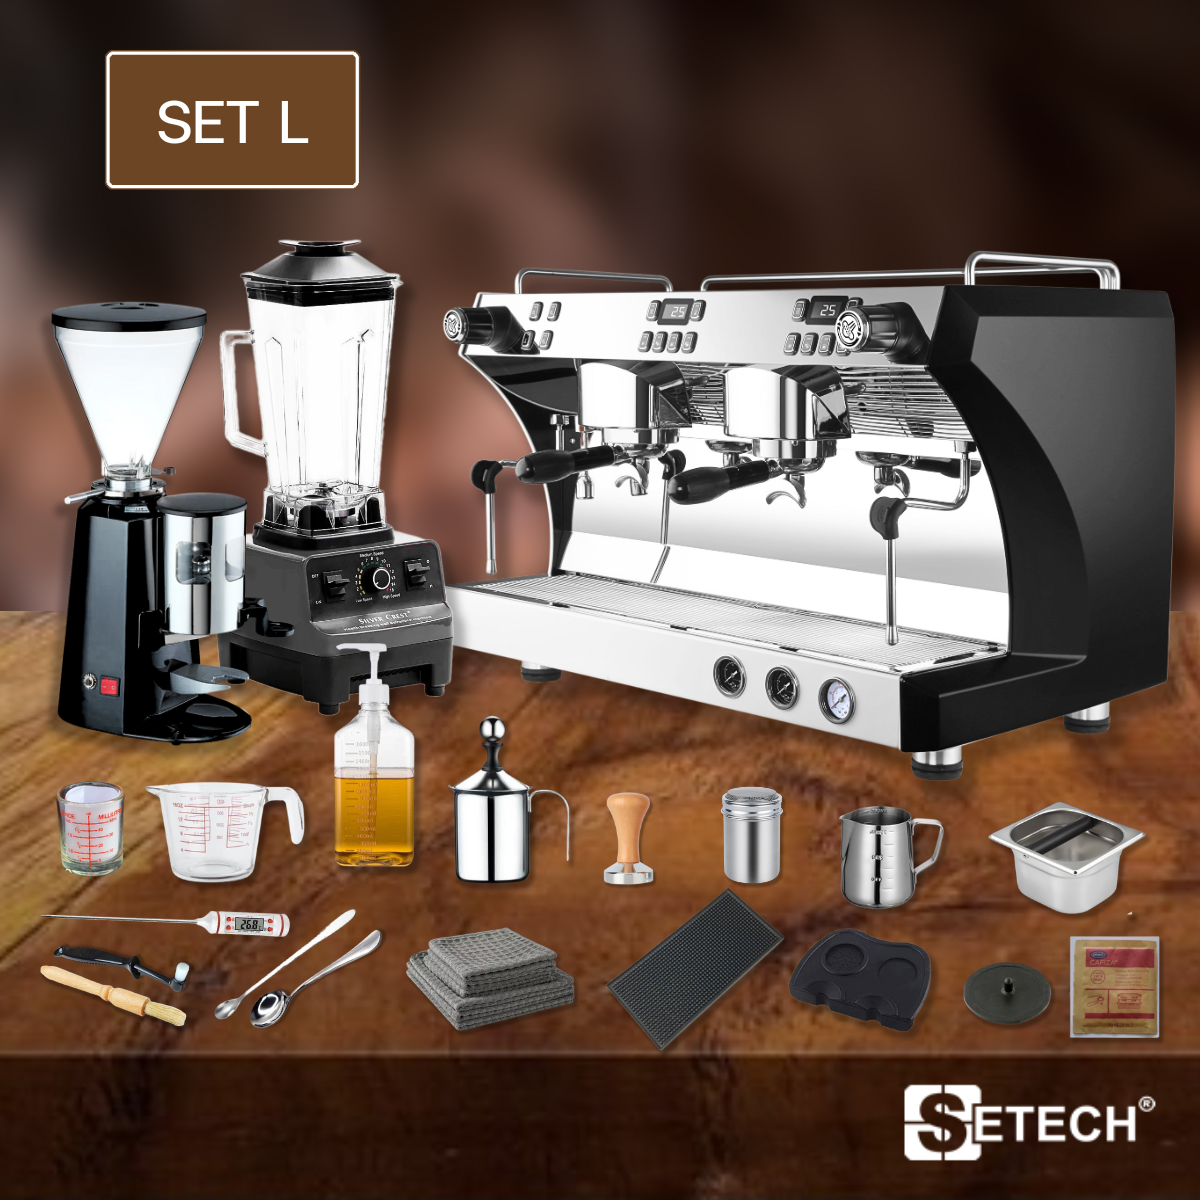 Coffee maker set for opening a shop equipment 26 items SET L SET L